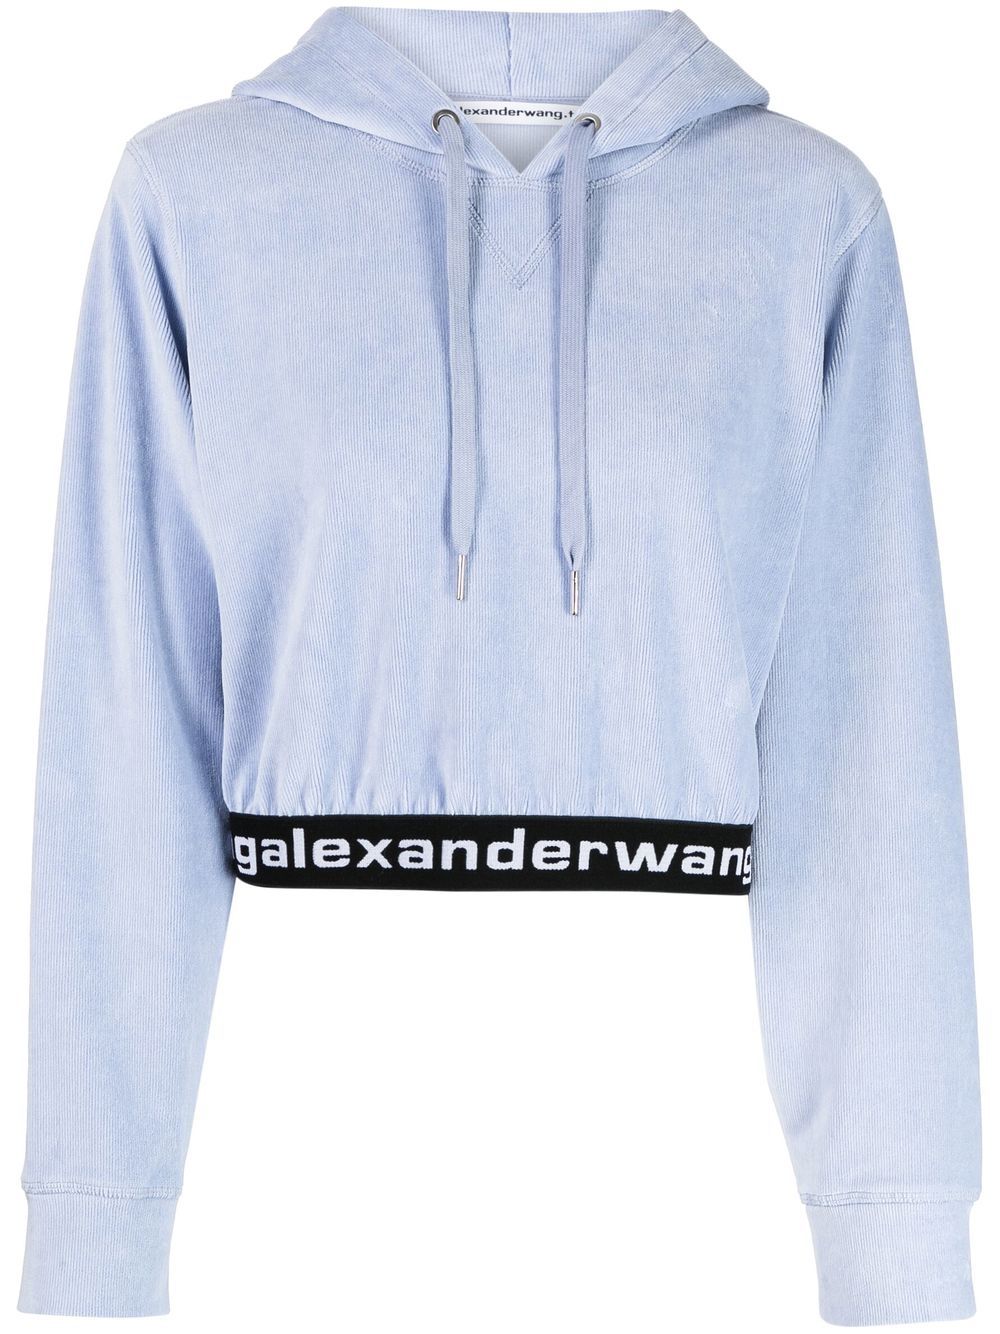 Alexander Wang logo-waistband Cropped Hoodie - Farfetch